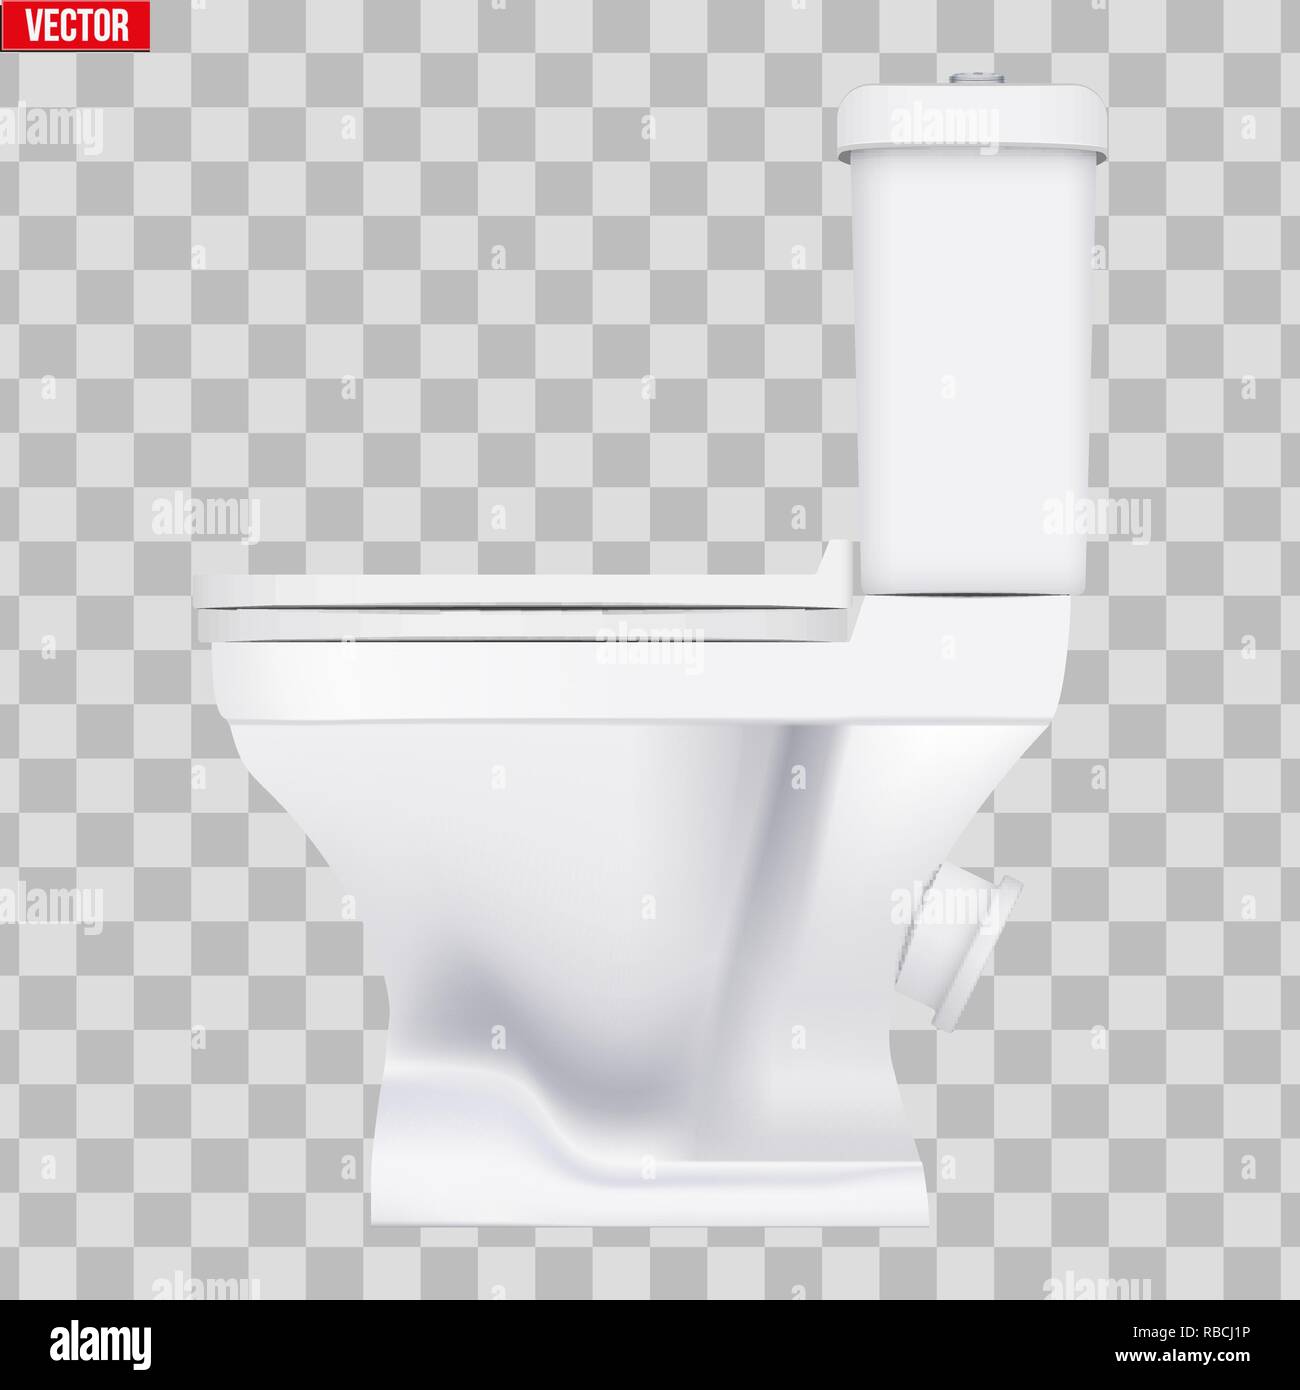 Ceramic toilet classic model Stock Vector